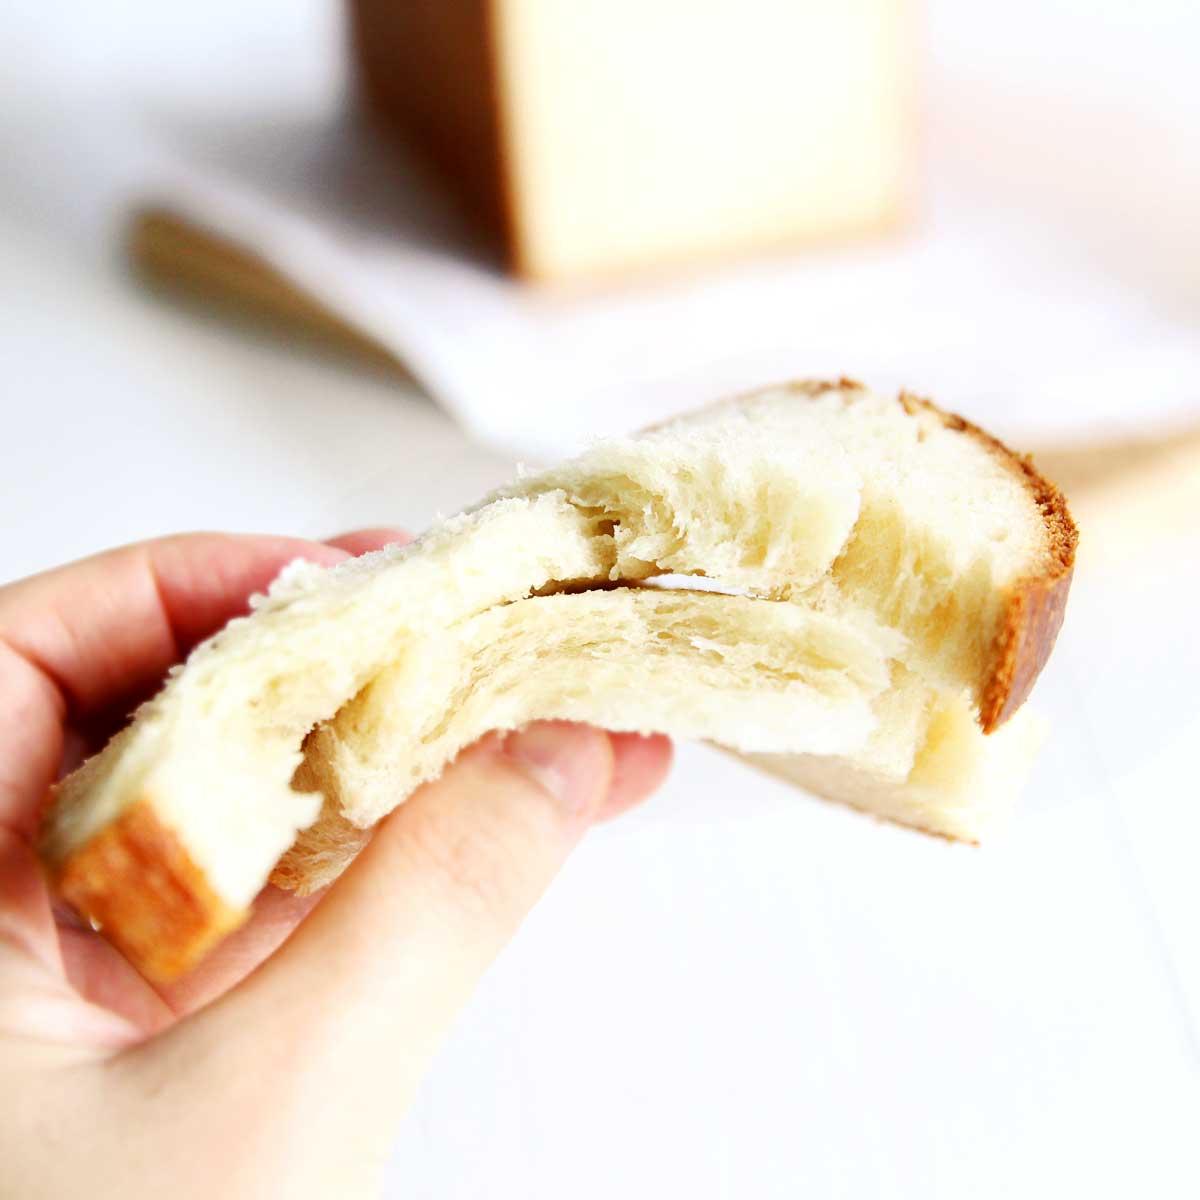 Soft & Silky Coconut Cream Yeast Bread (Vegan Friendly) - Ricotta Cheese Yeast Bread